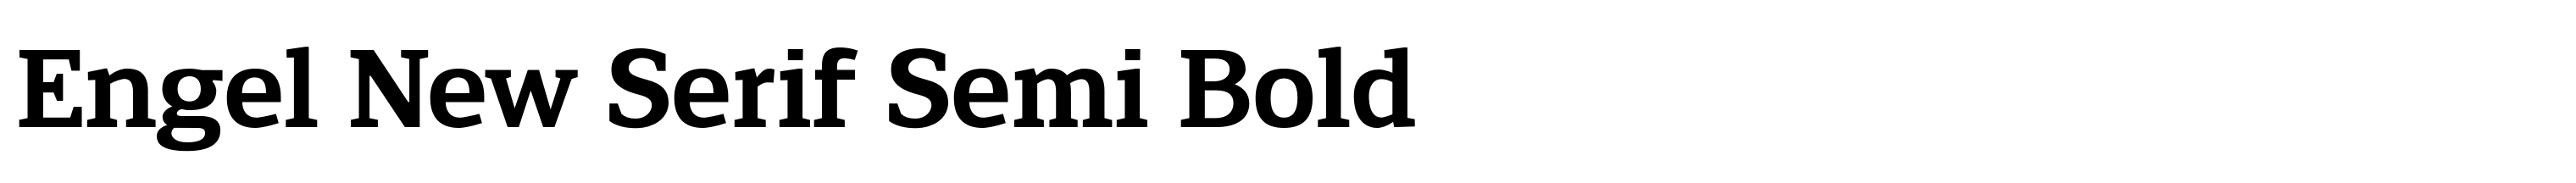 Engel New Serif Semi Bold